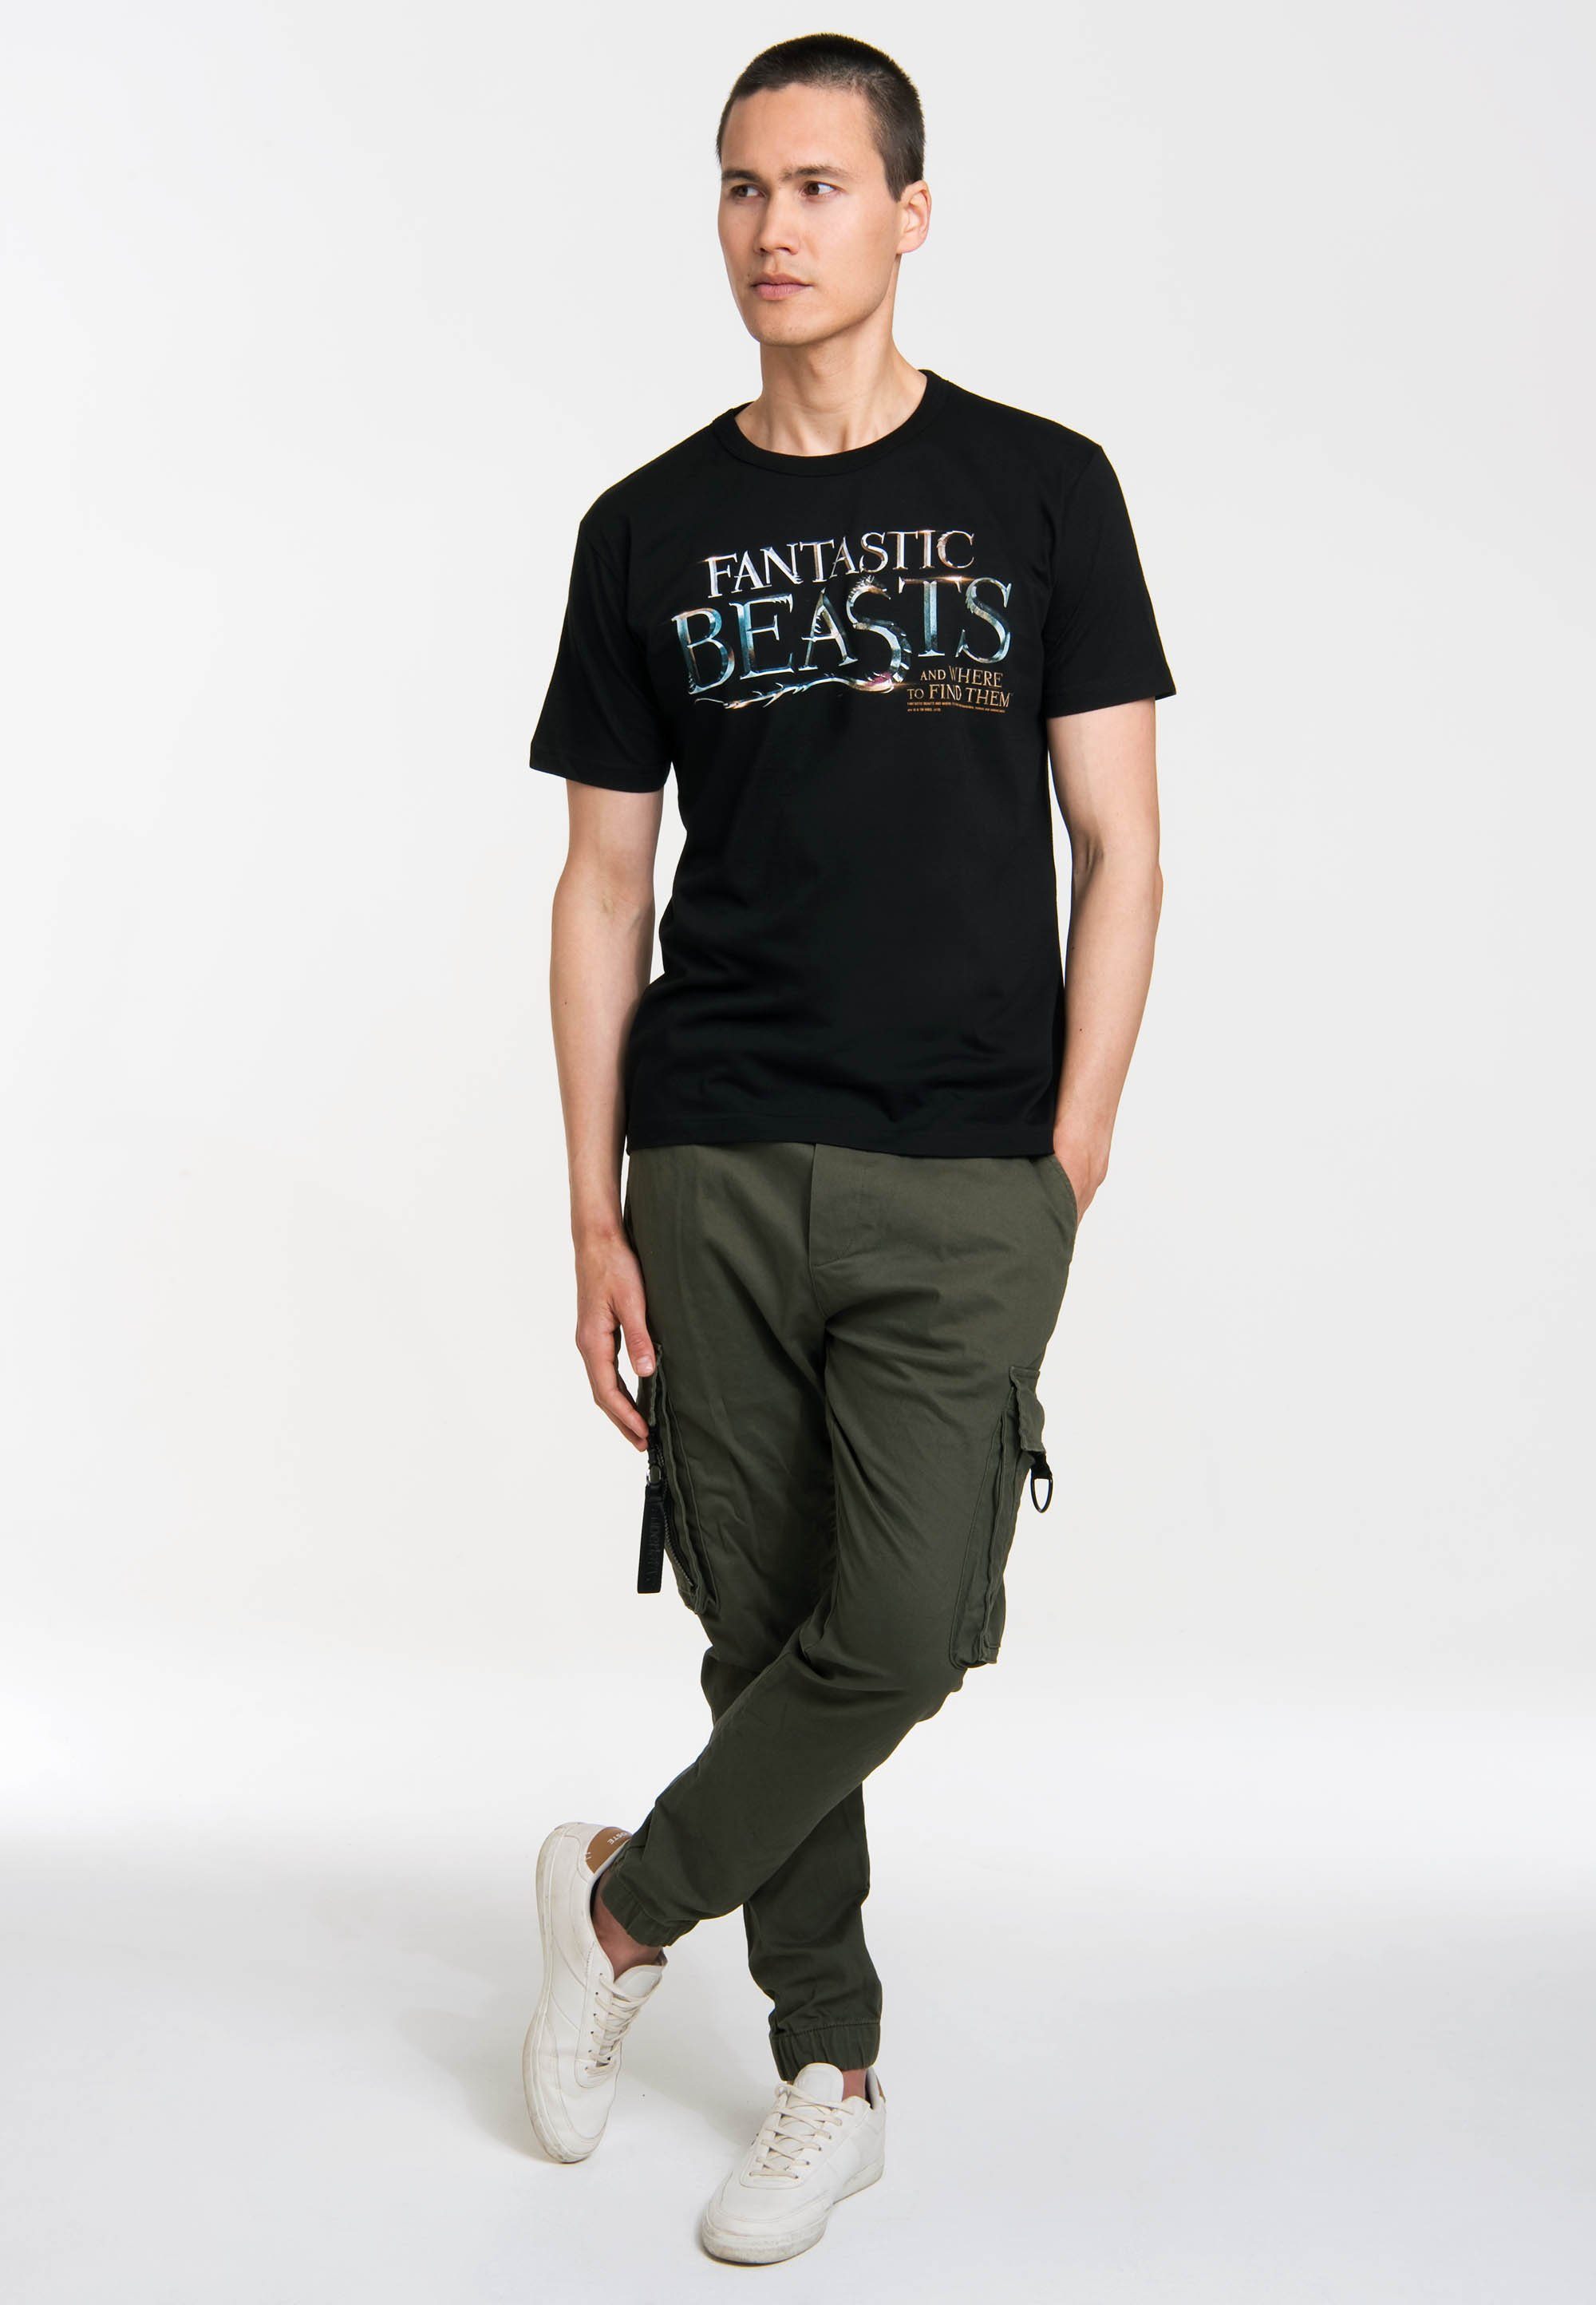 Frontdruck LOGOSHIRT tollem Fantastic Beasts T-Shirt mit